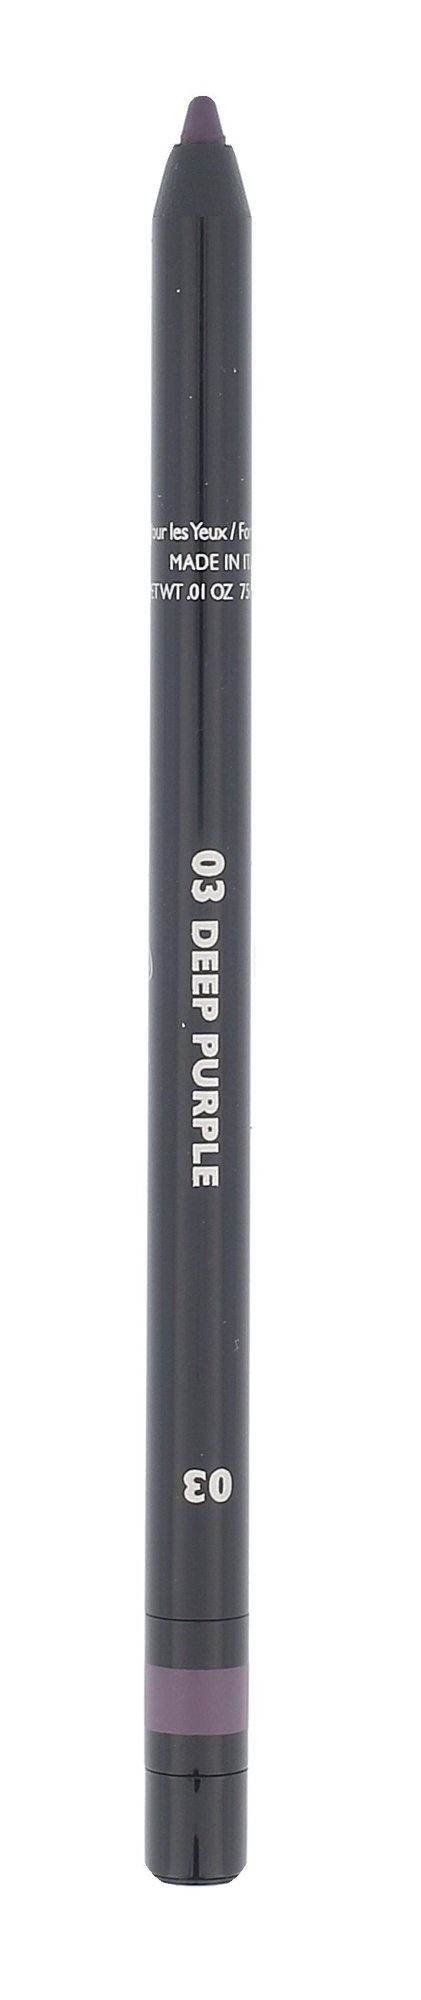 Guerlain The Eye Pencil 0,5g akių pieštukas